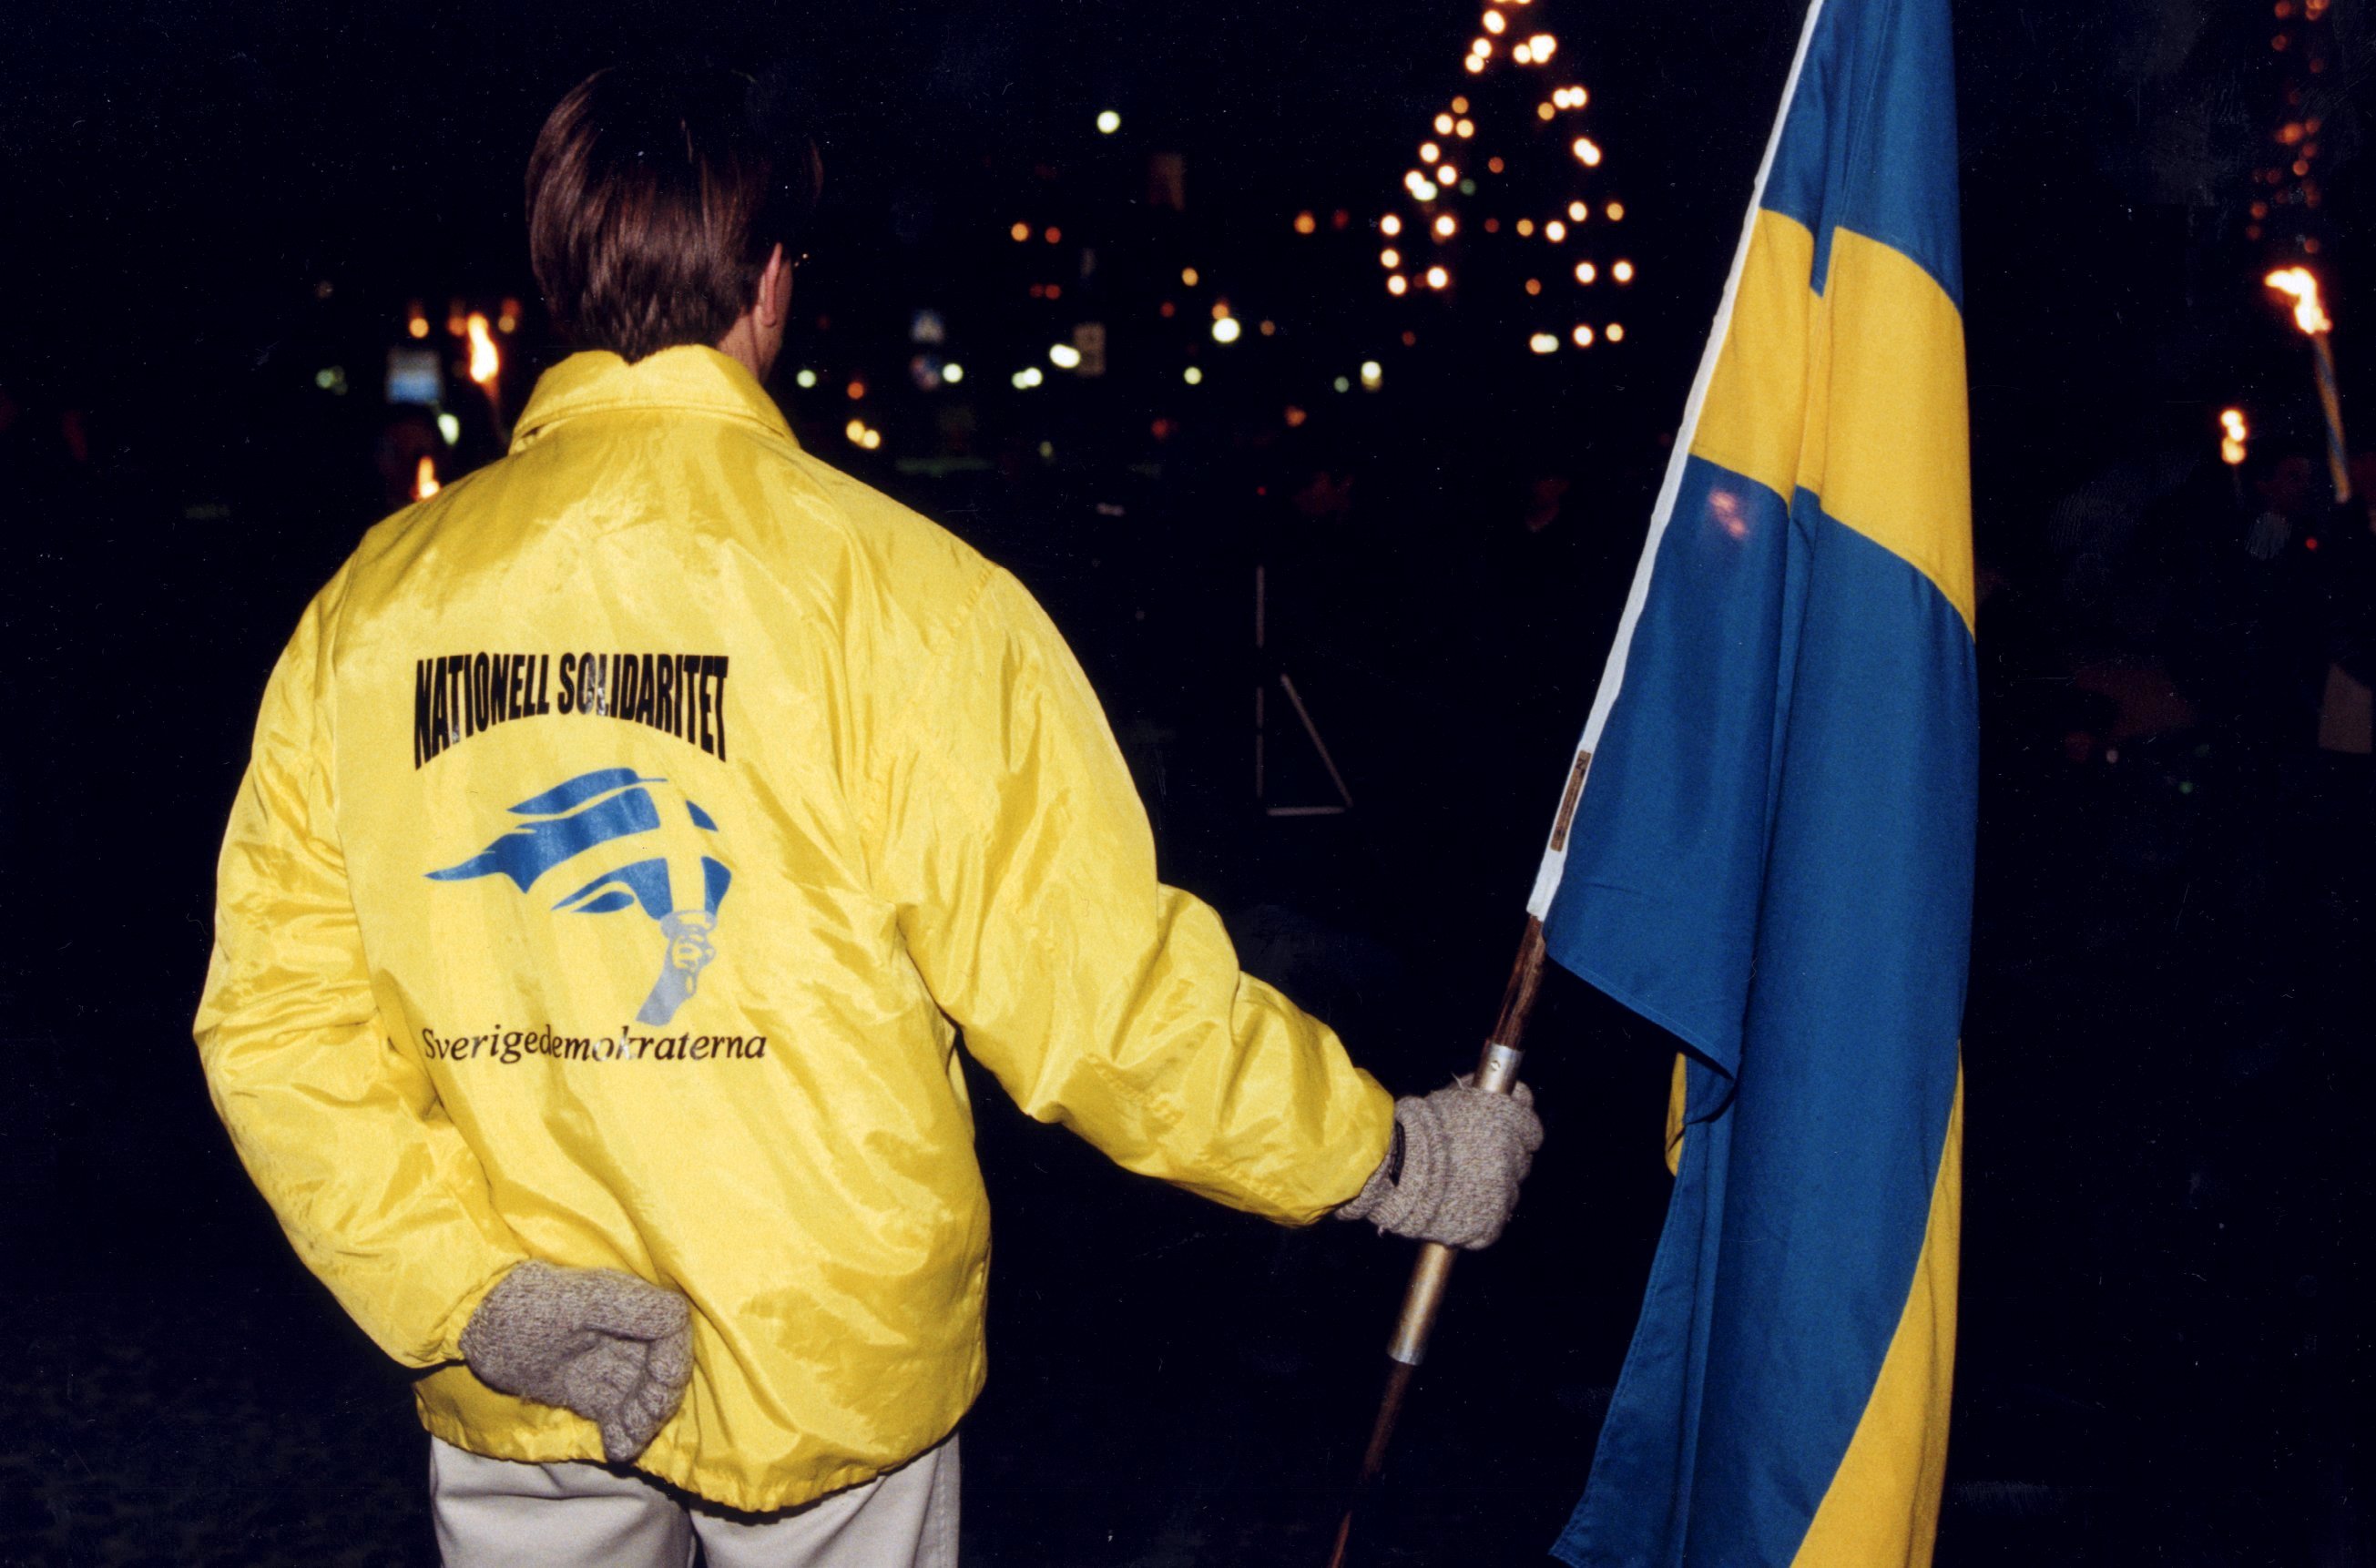 Riksdagsvalet 2010, Sverigedemokraterna, Stureplan, gatuvåld